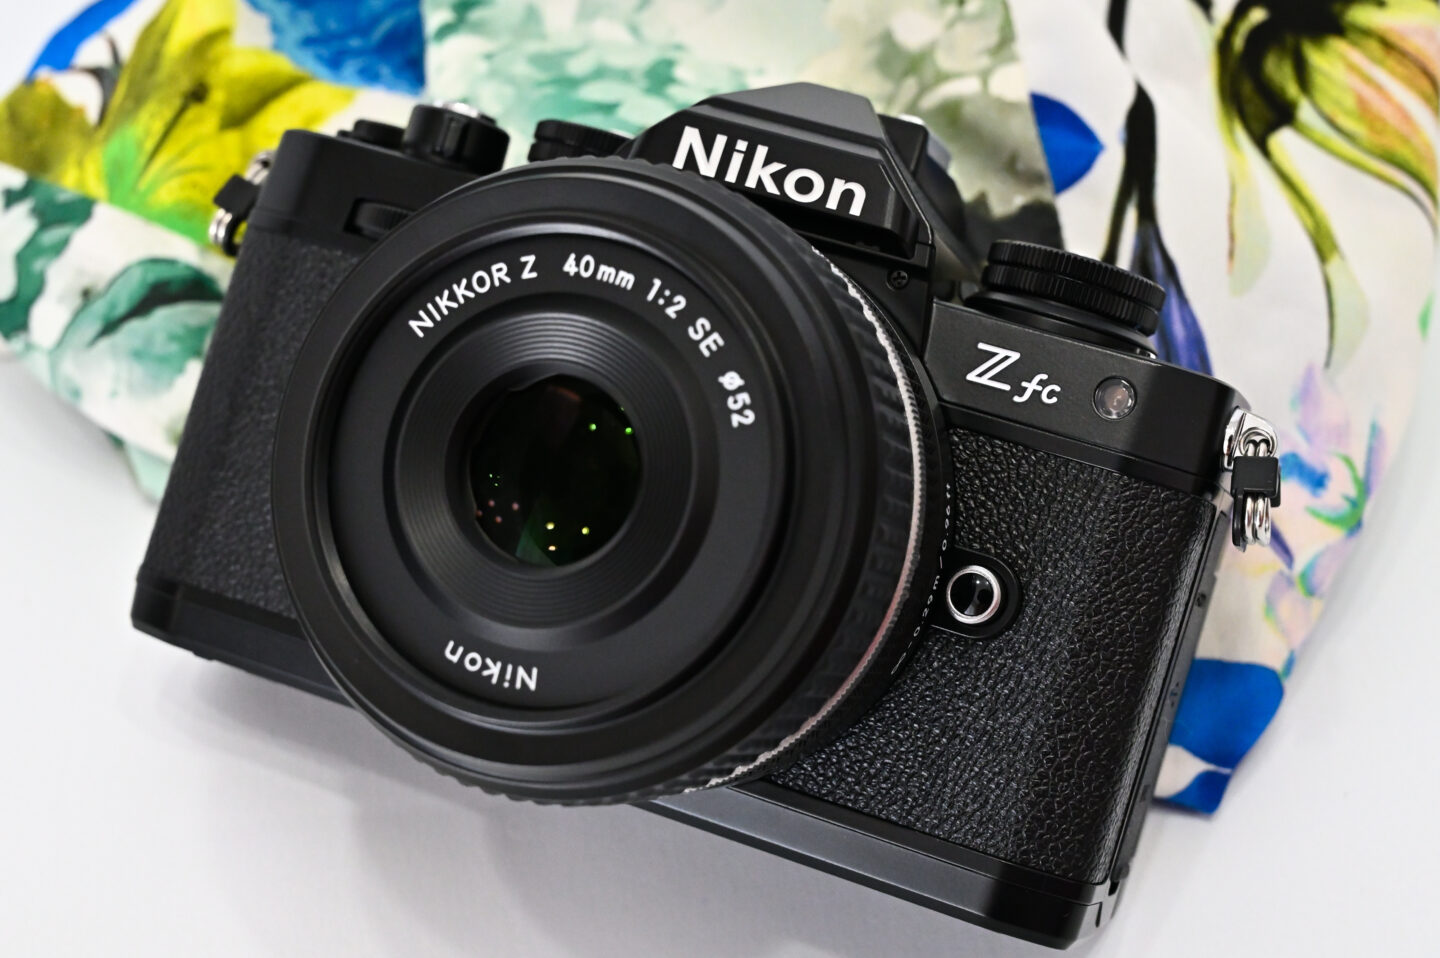 Nikon Zfc ボディ